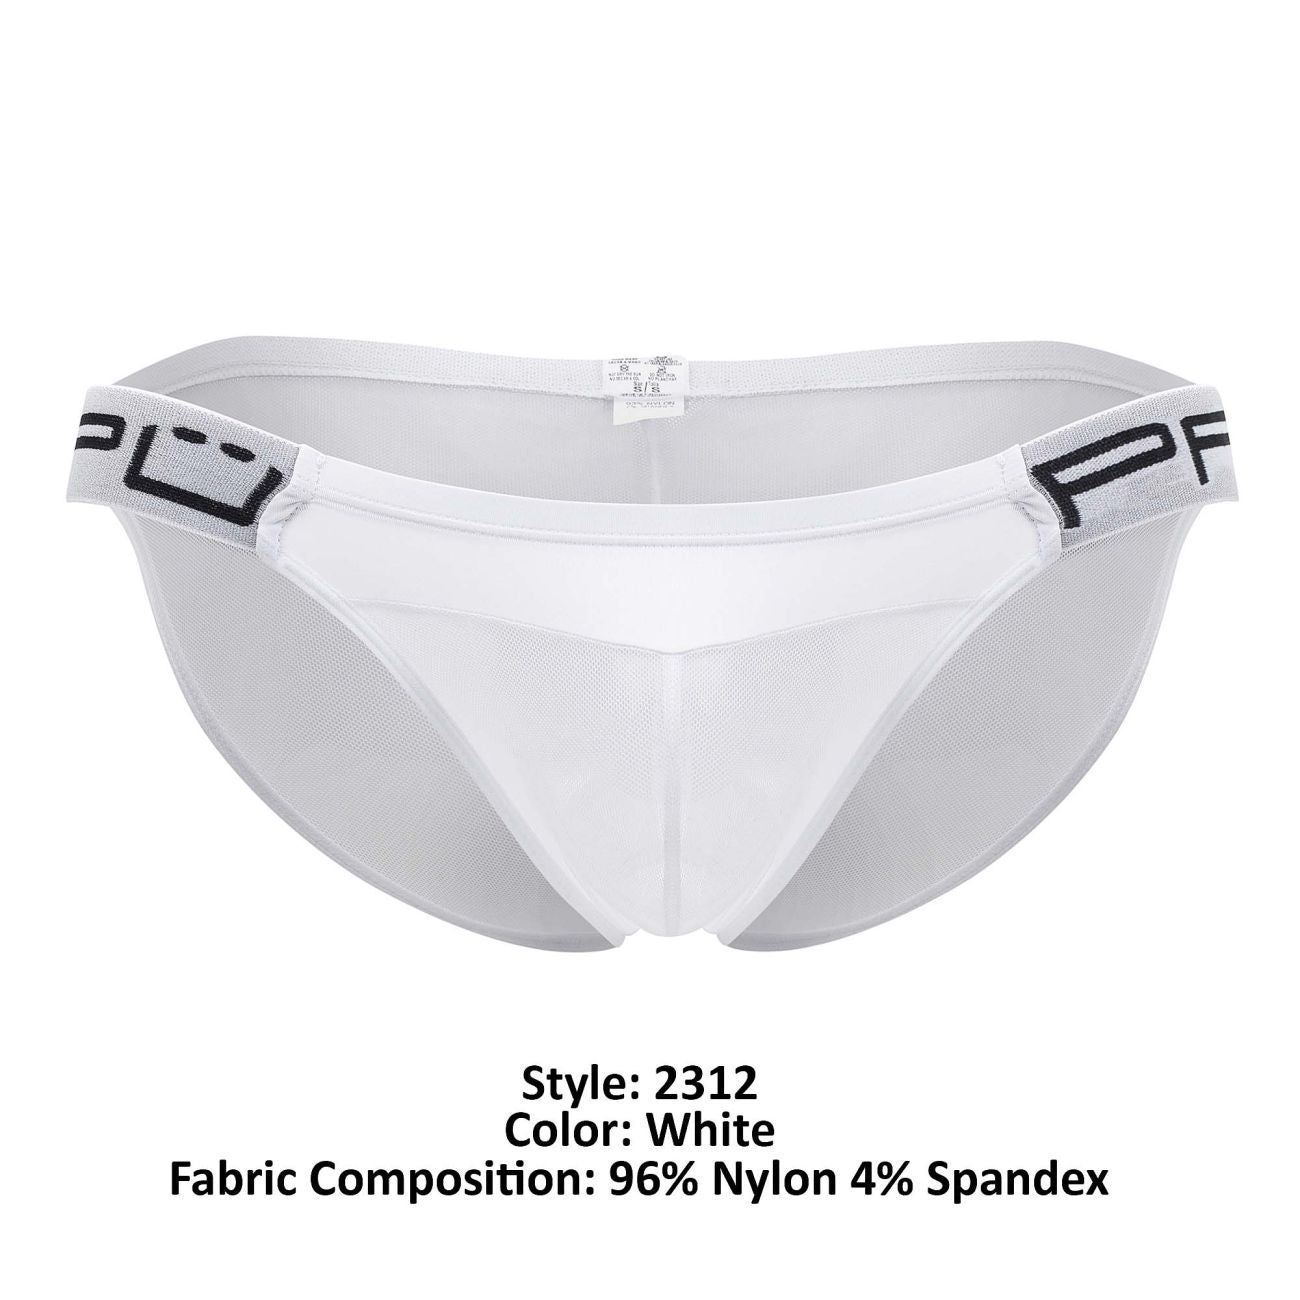 PPU 2312 Mesh Bikini White